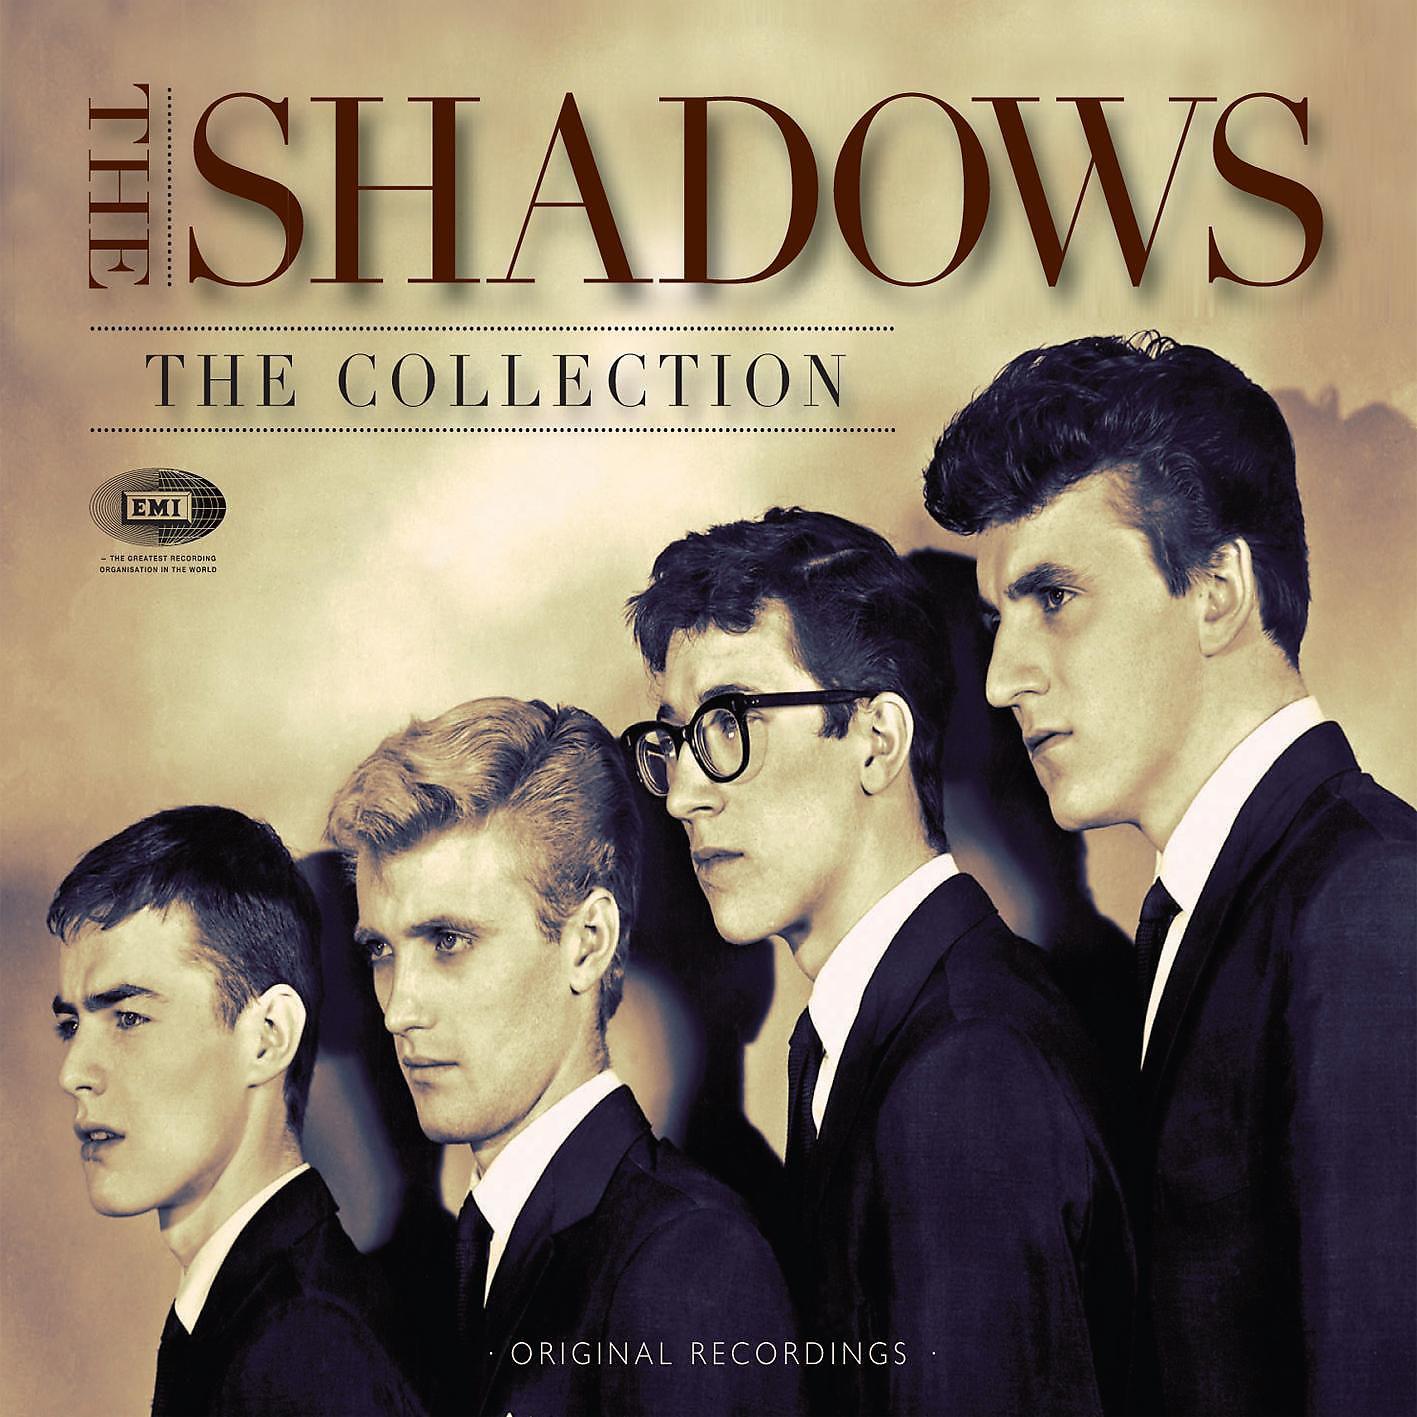 Обложка shadow. Группа the Shadows. The Shadows обложки альбомов. Shadow Shadow. Группа the Shadows альбомы.